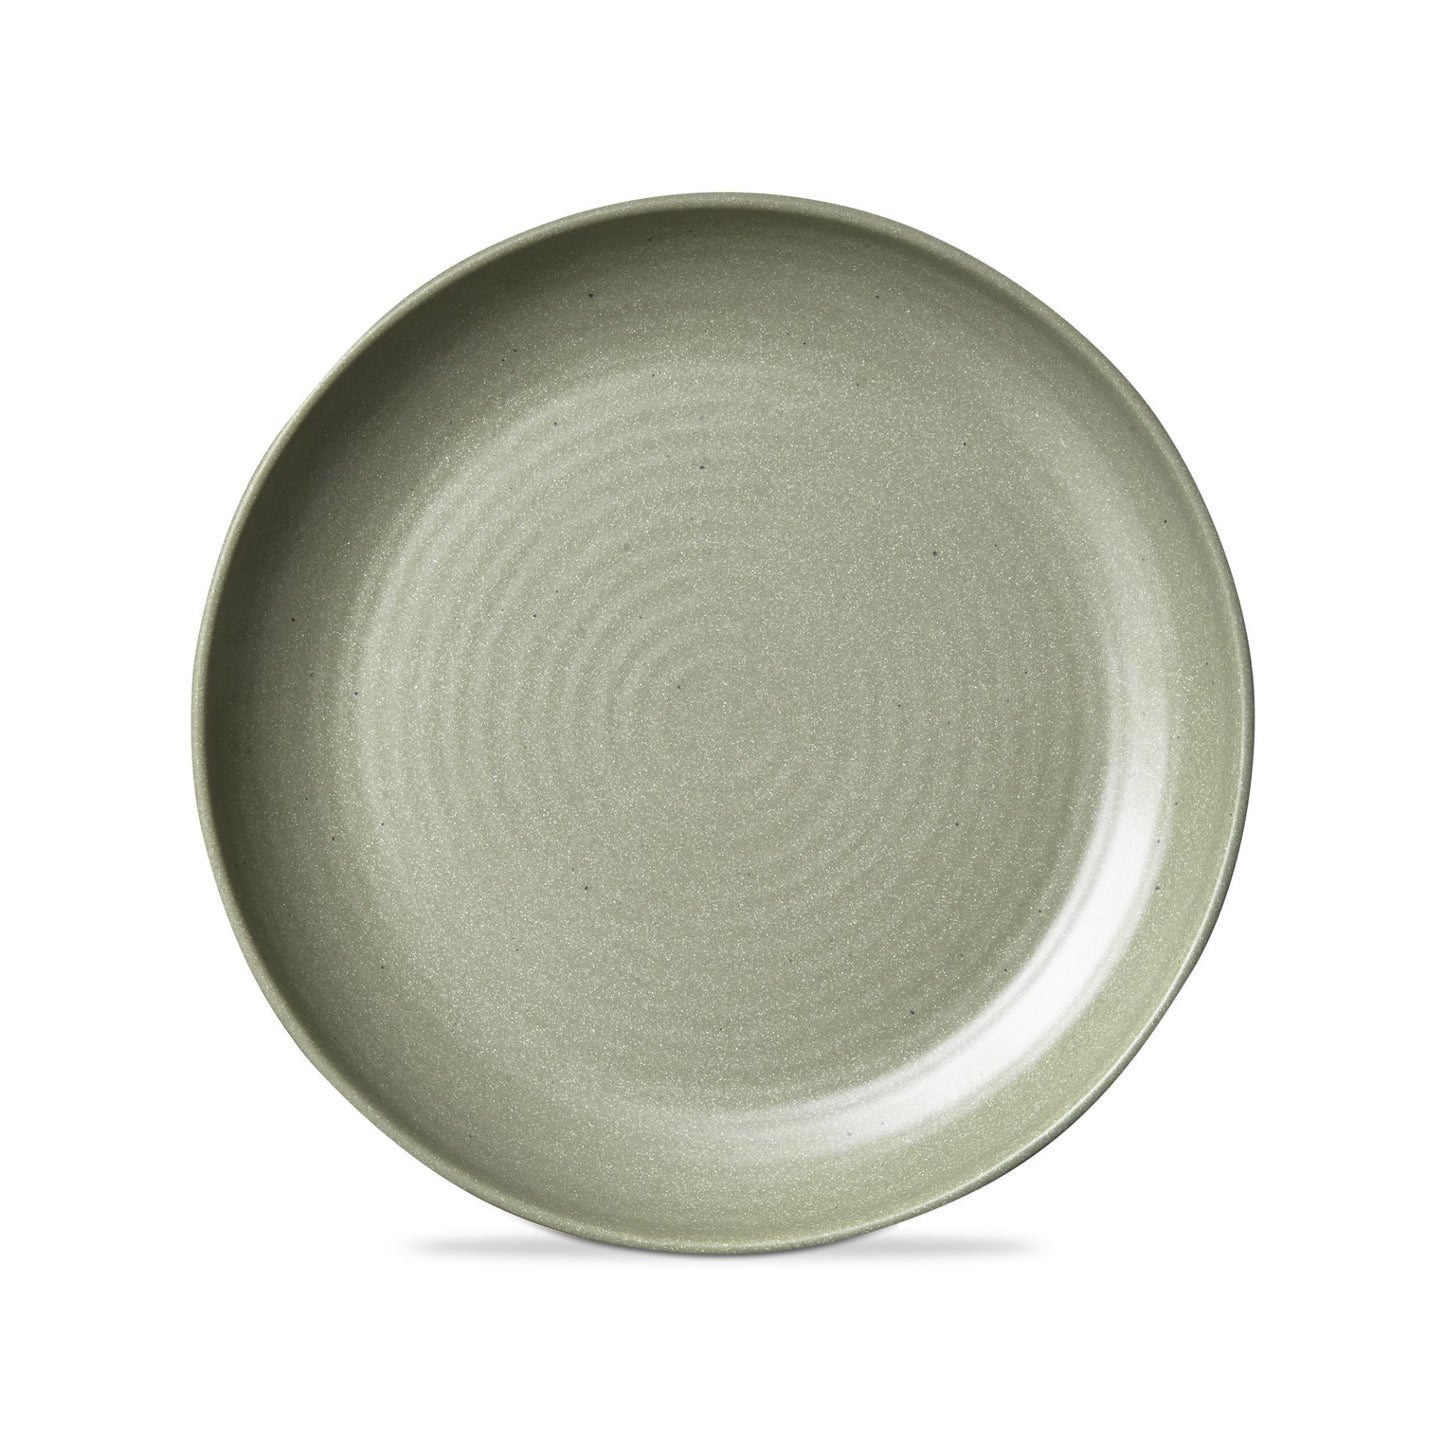 sage Brooklyn Melamine Salad Plate on a white background.